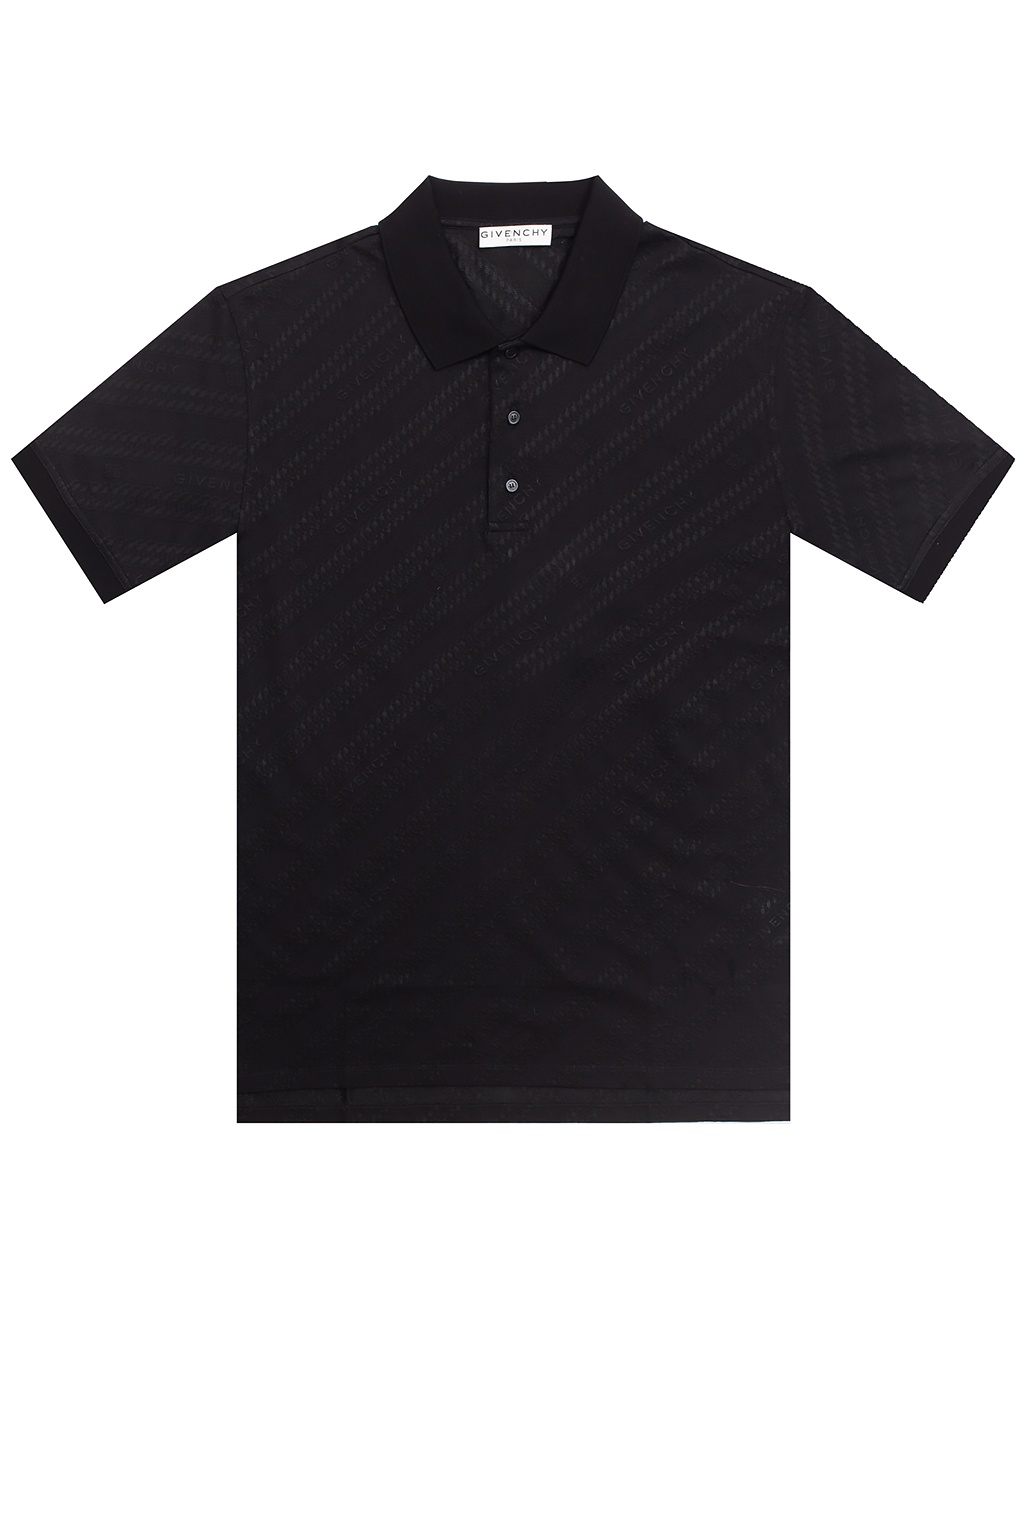 black givenchy polo shirt